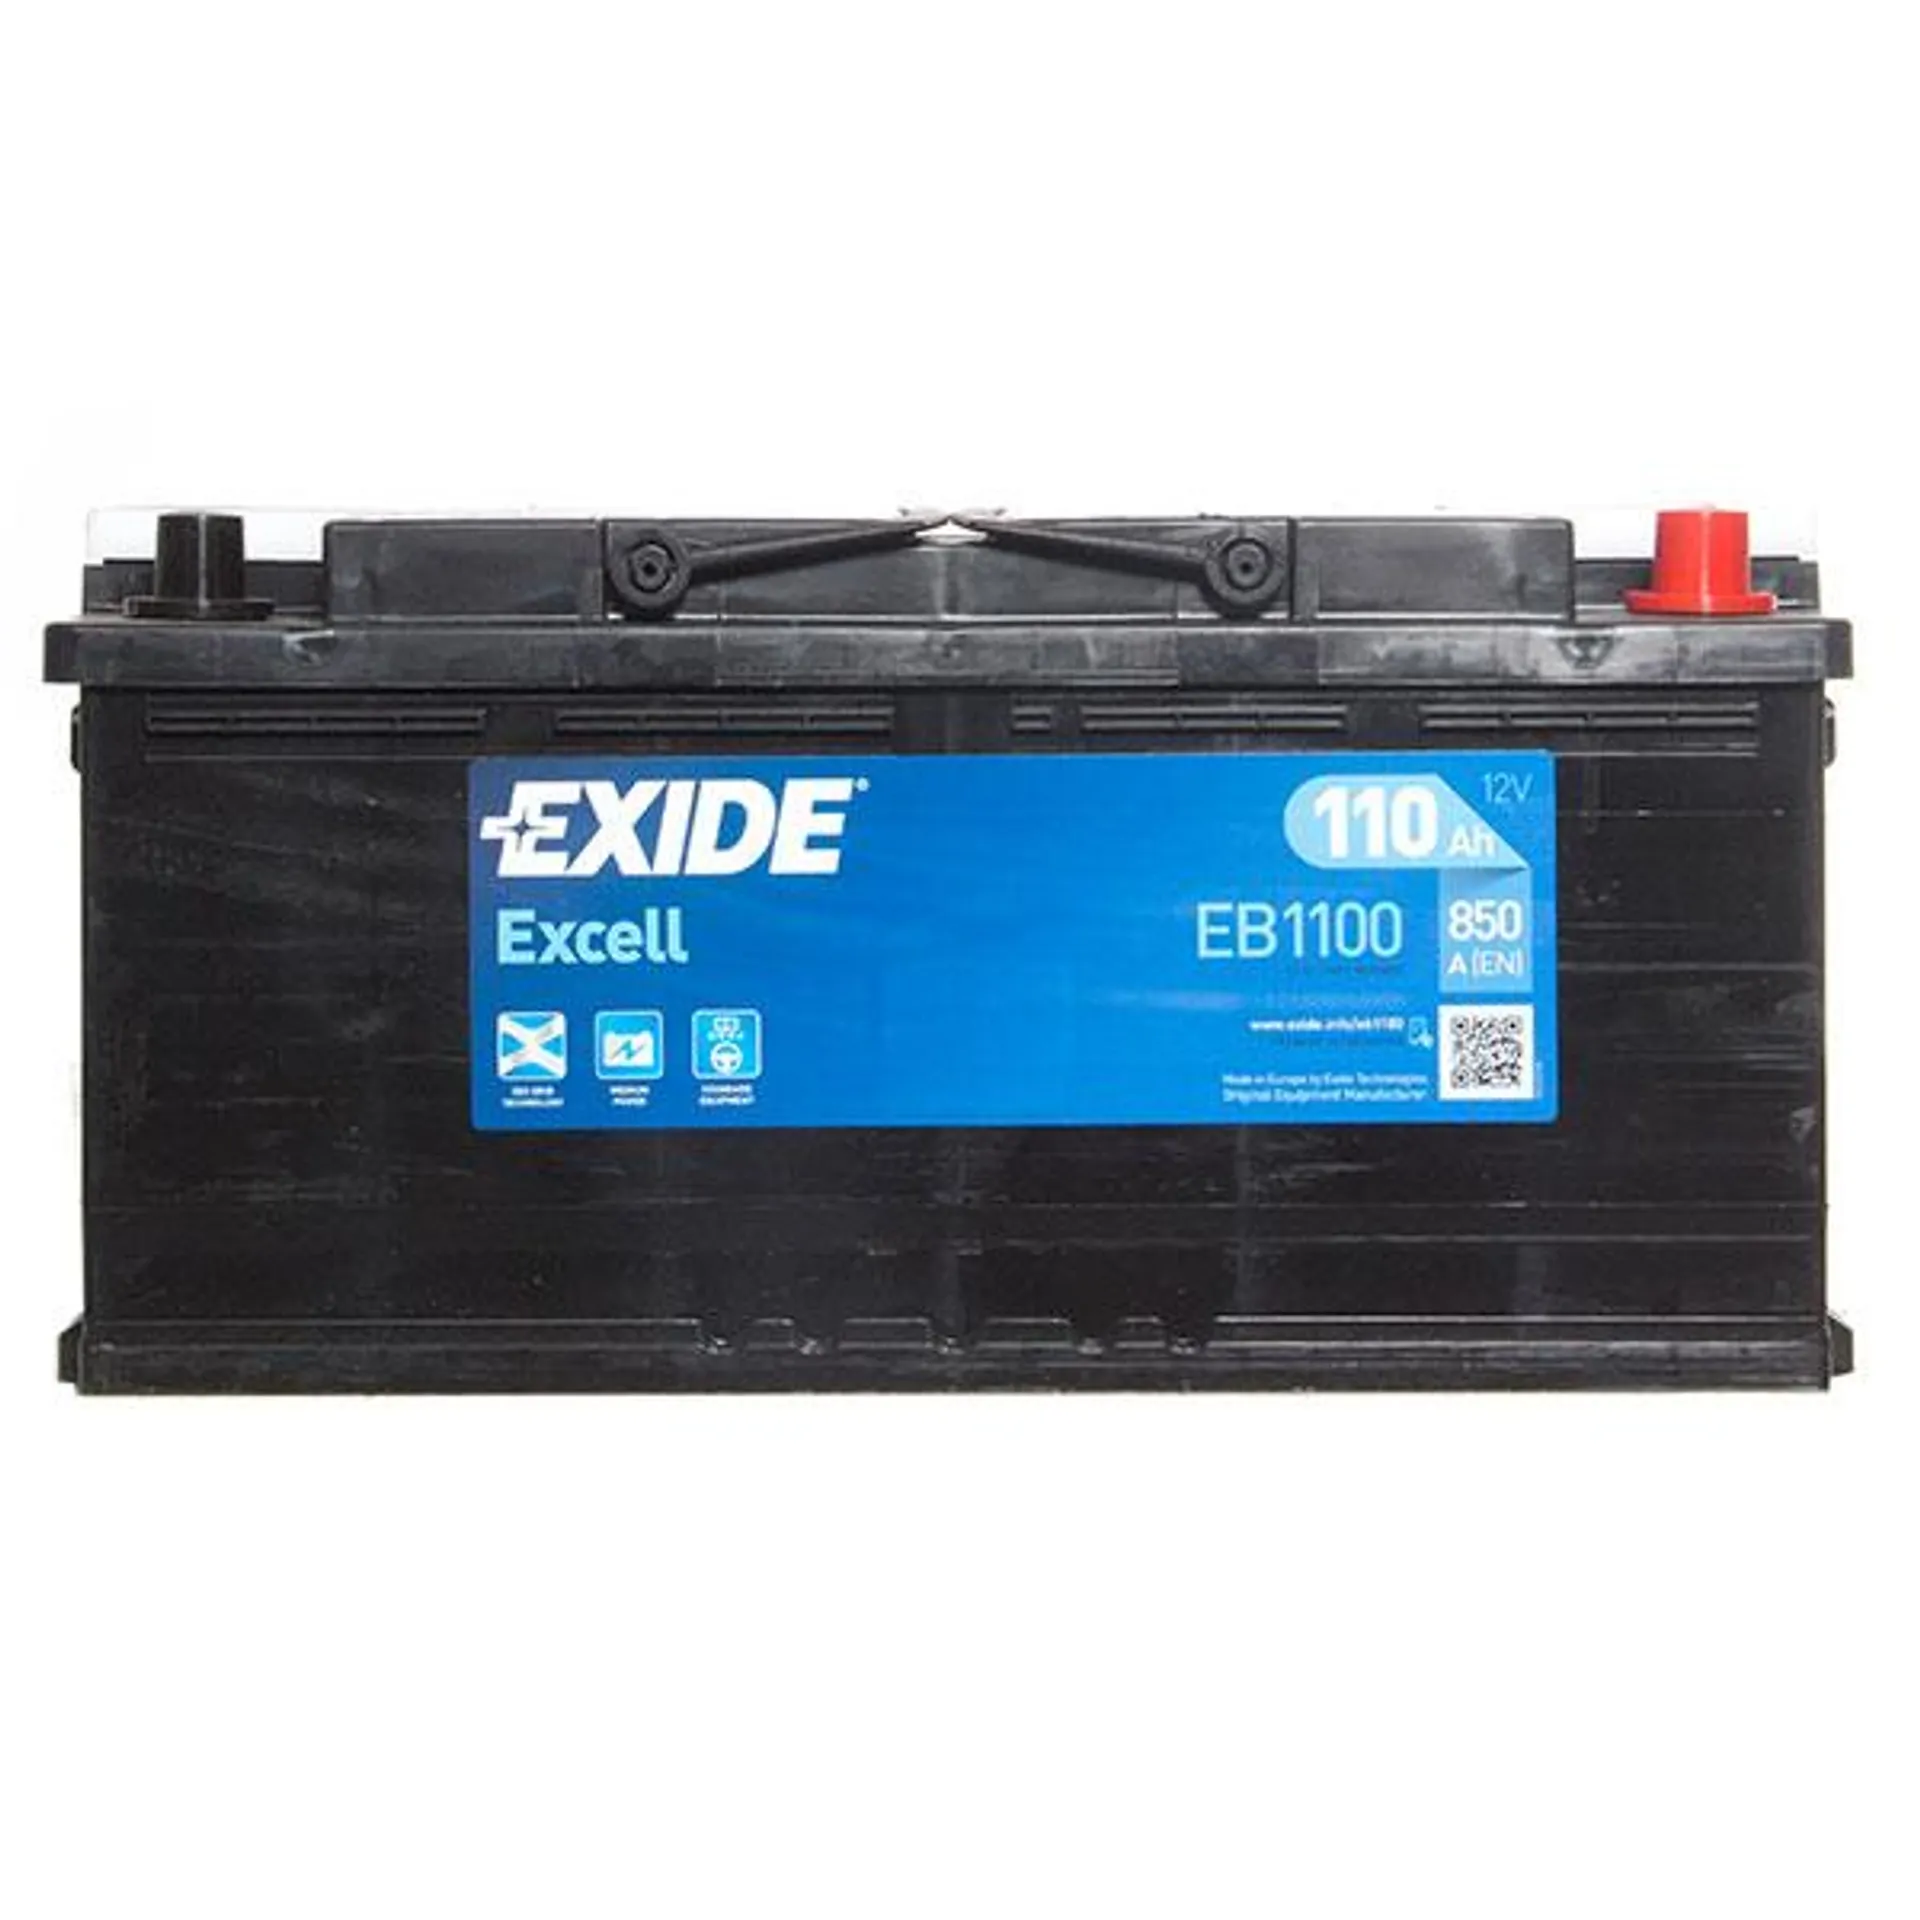 Exide Excel 020 Car Battery (110Ah) - 3 Year Guarantee